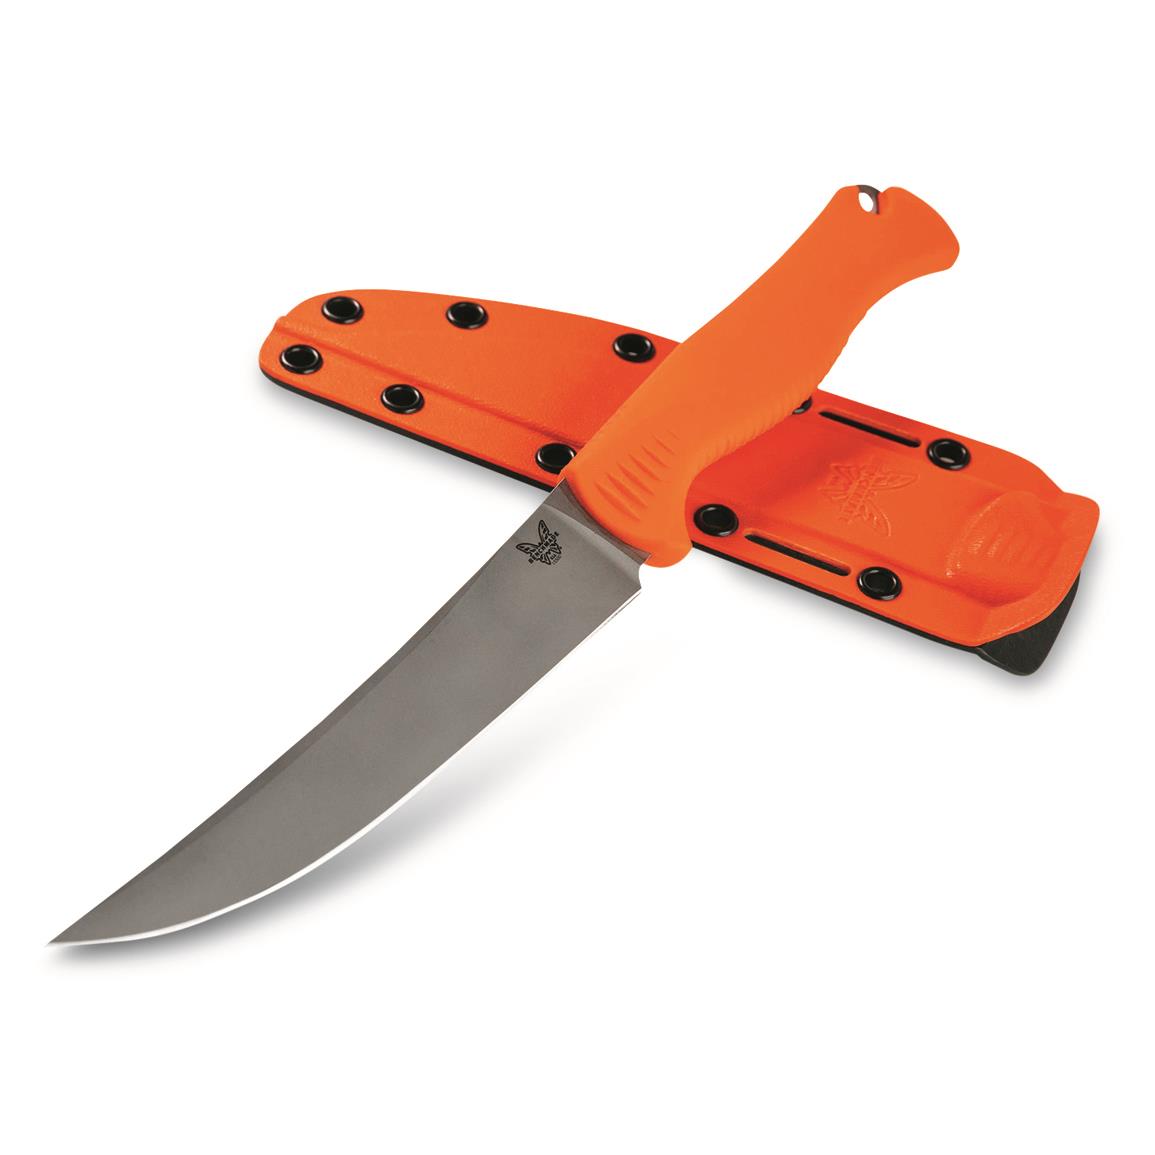 Benchmade - 15500 Meatcrafter Knife - Plain Edge - Orange Santoprene Handle